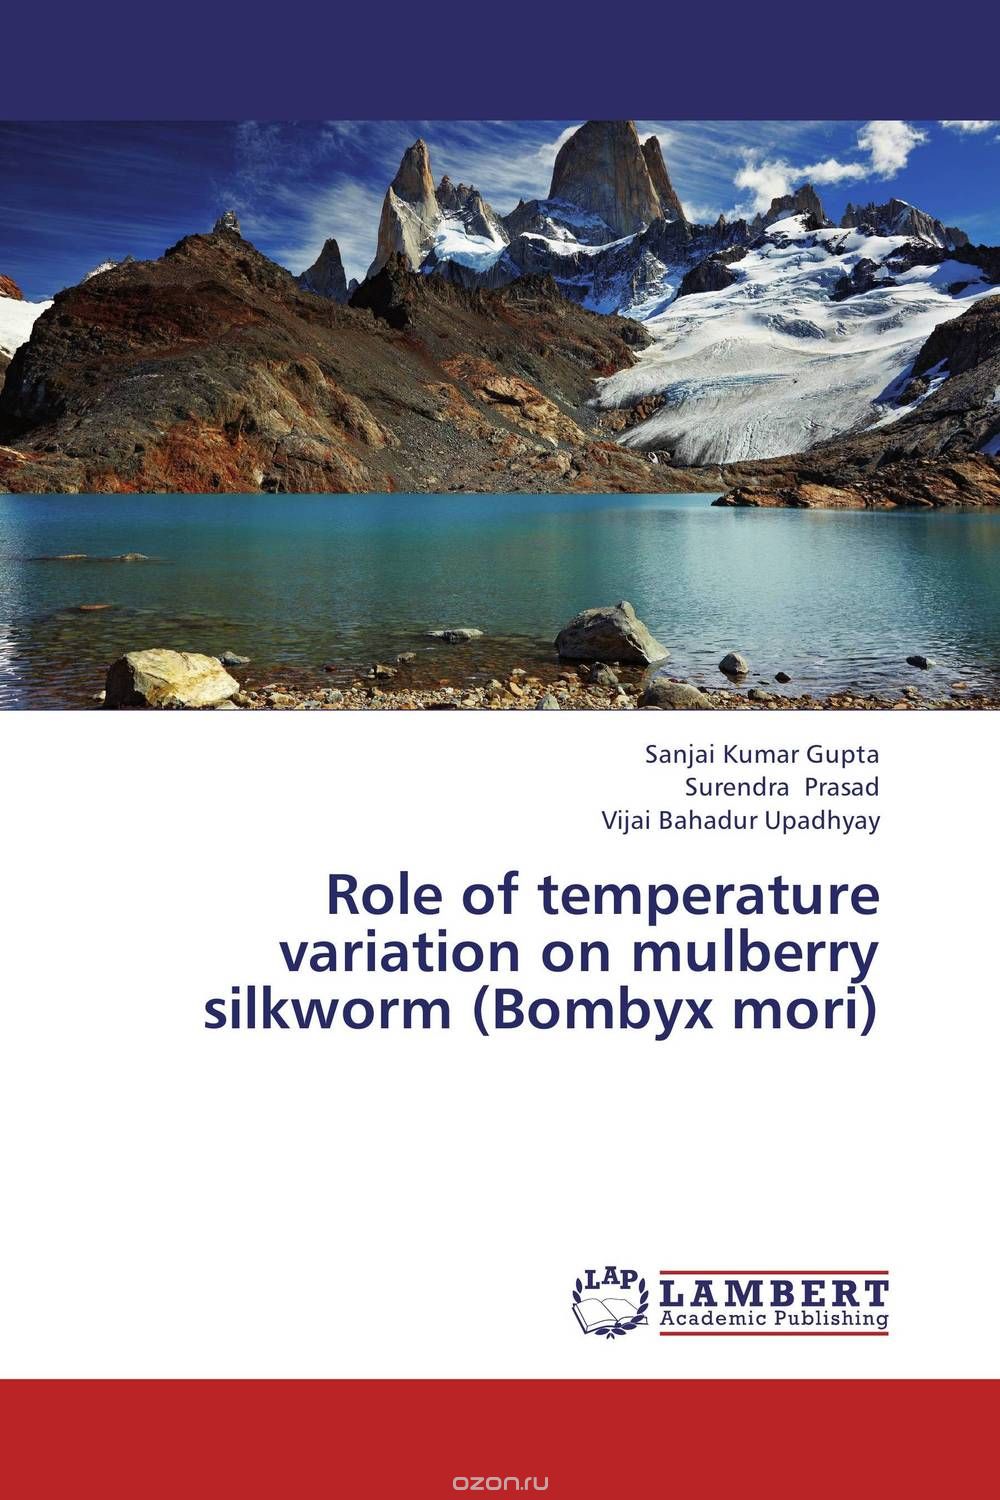 Скачать книгу "Role of temperature variation on mulberry silkworm (Bombyx mori)"